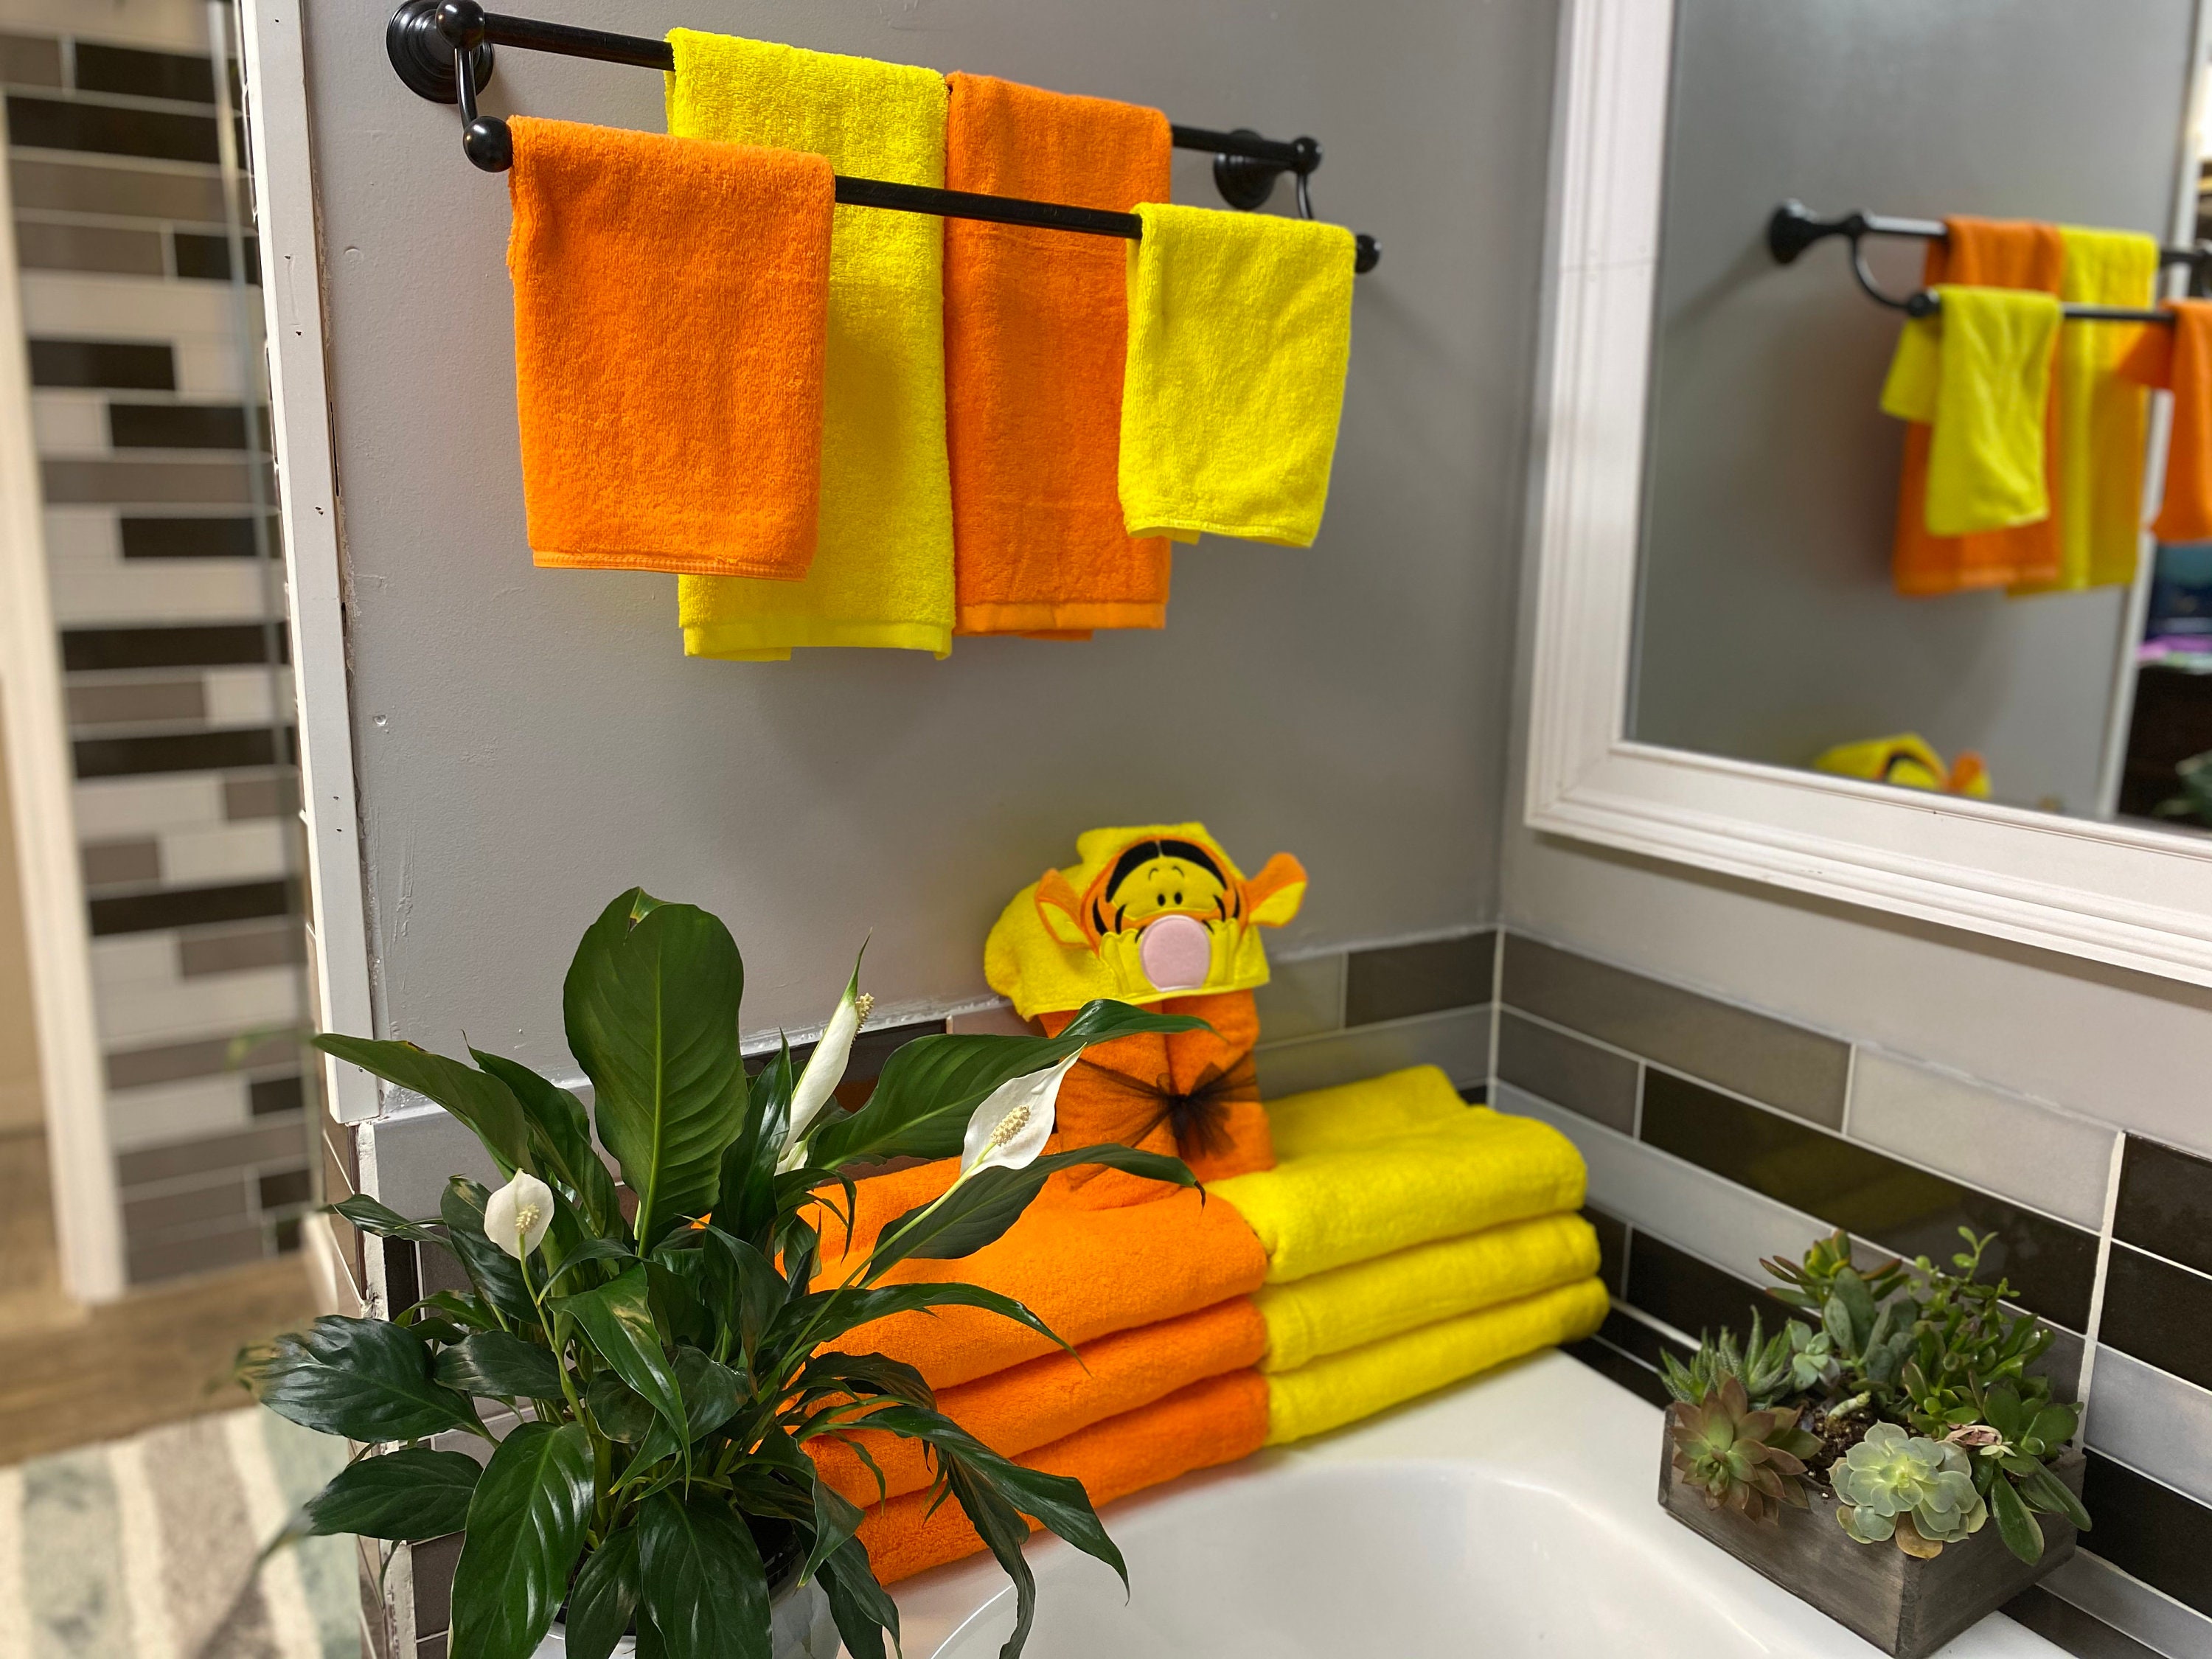  Toallas de baño de Acción de Gracias para mujer, toallas de  baño grandes de 31.5 x 95 pulgadas, calabaza naranja, girasol, toalla de  baño de microfibra para adultos, ducha, spa/gimnasio 